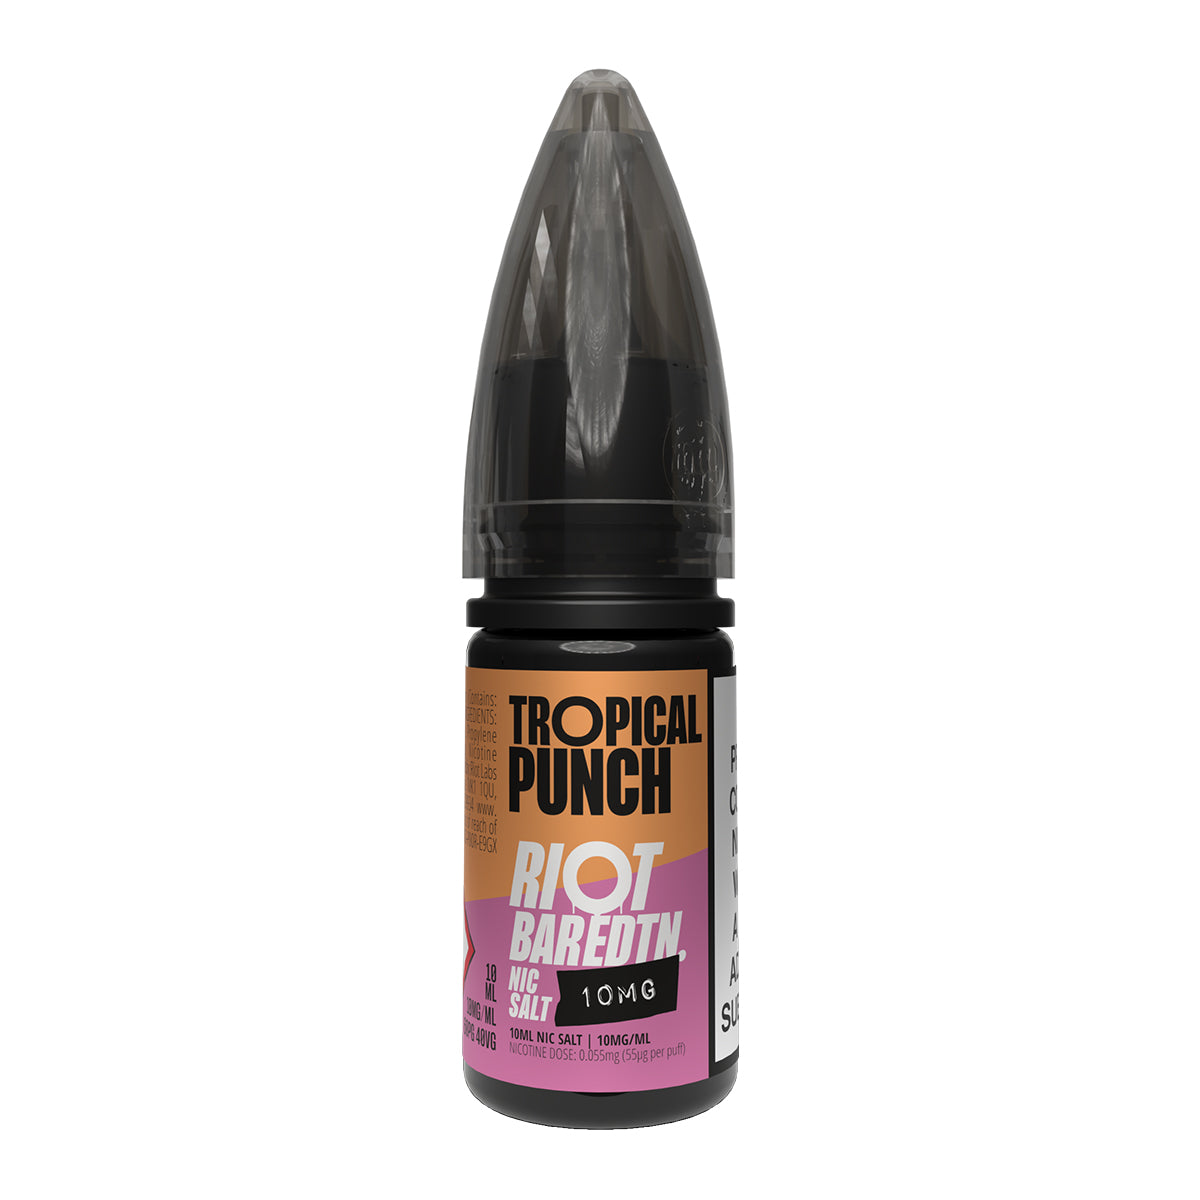 Tropical Punch 10ml Nicotine Salt 10mg by Riot Bar Edtn